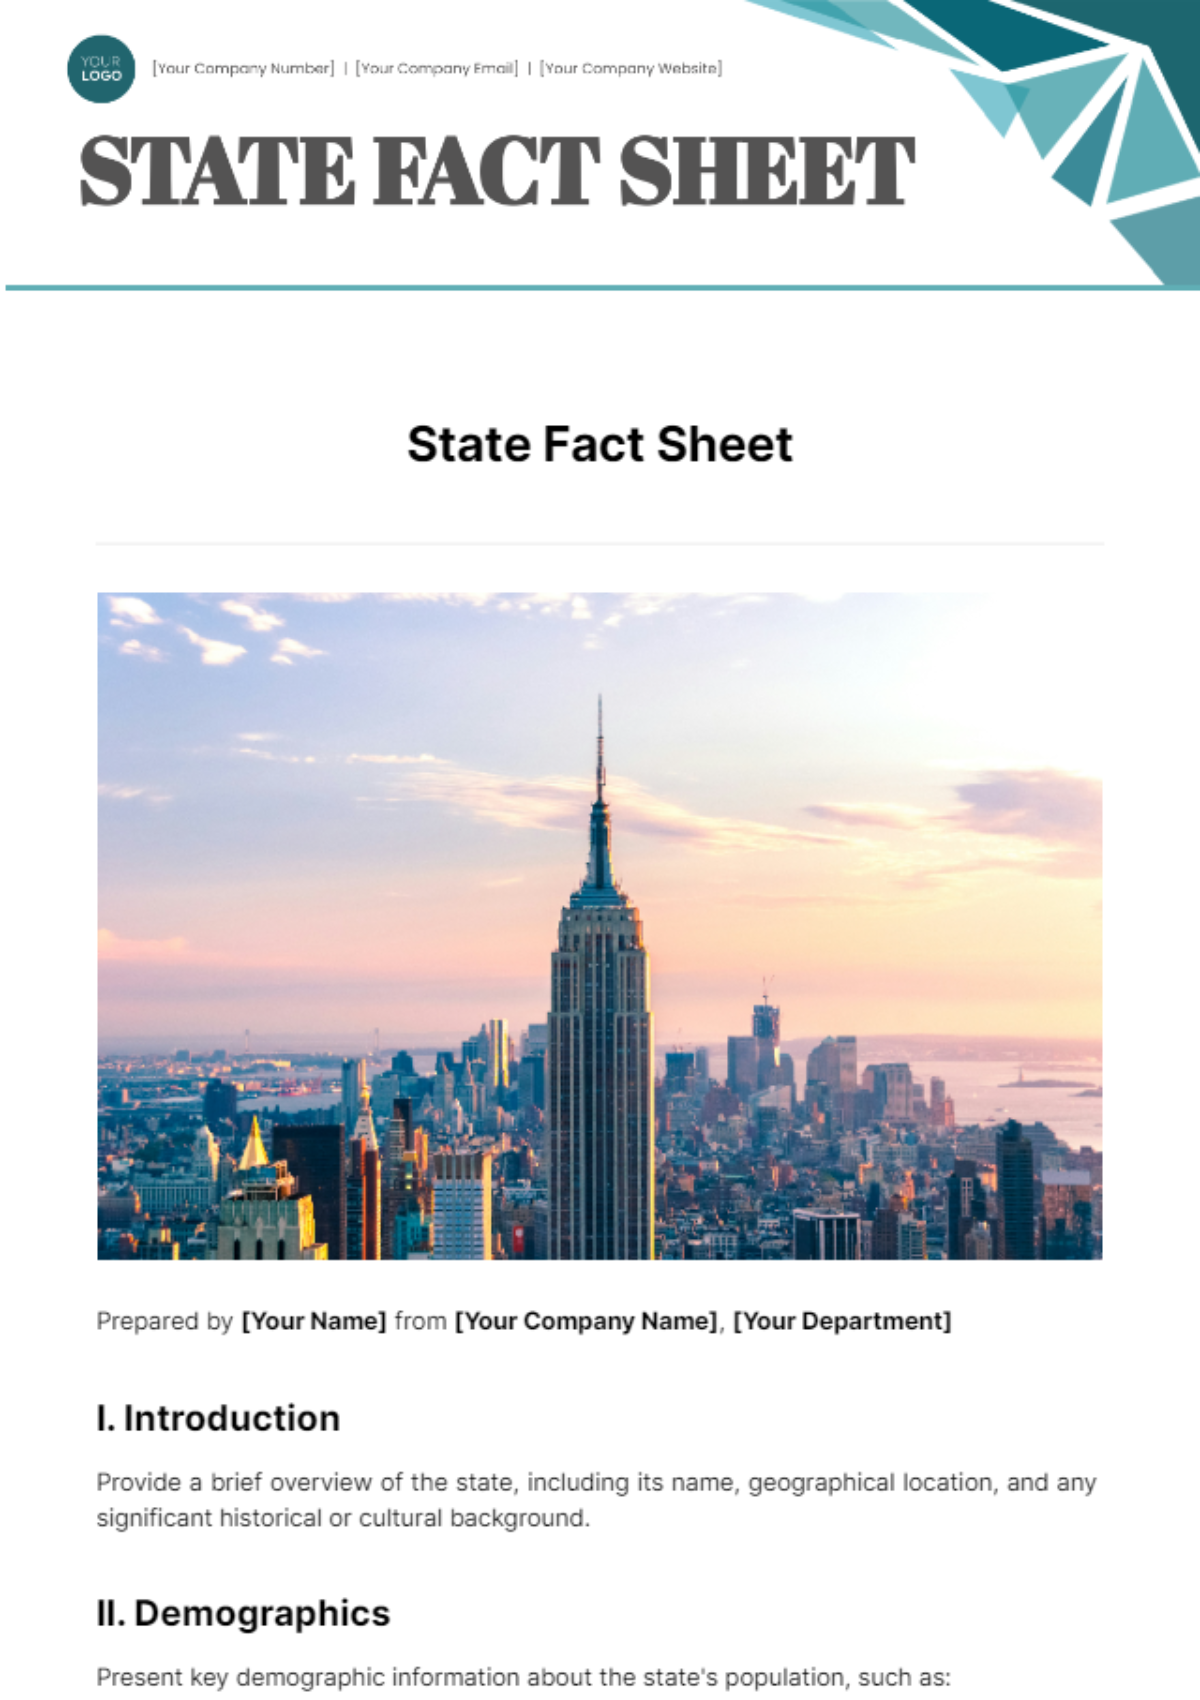 State Fact Sheet Template